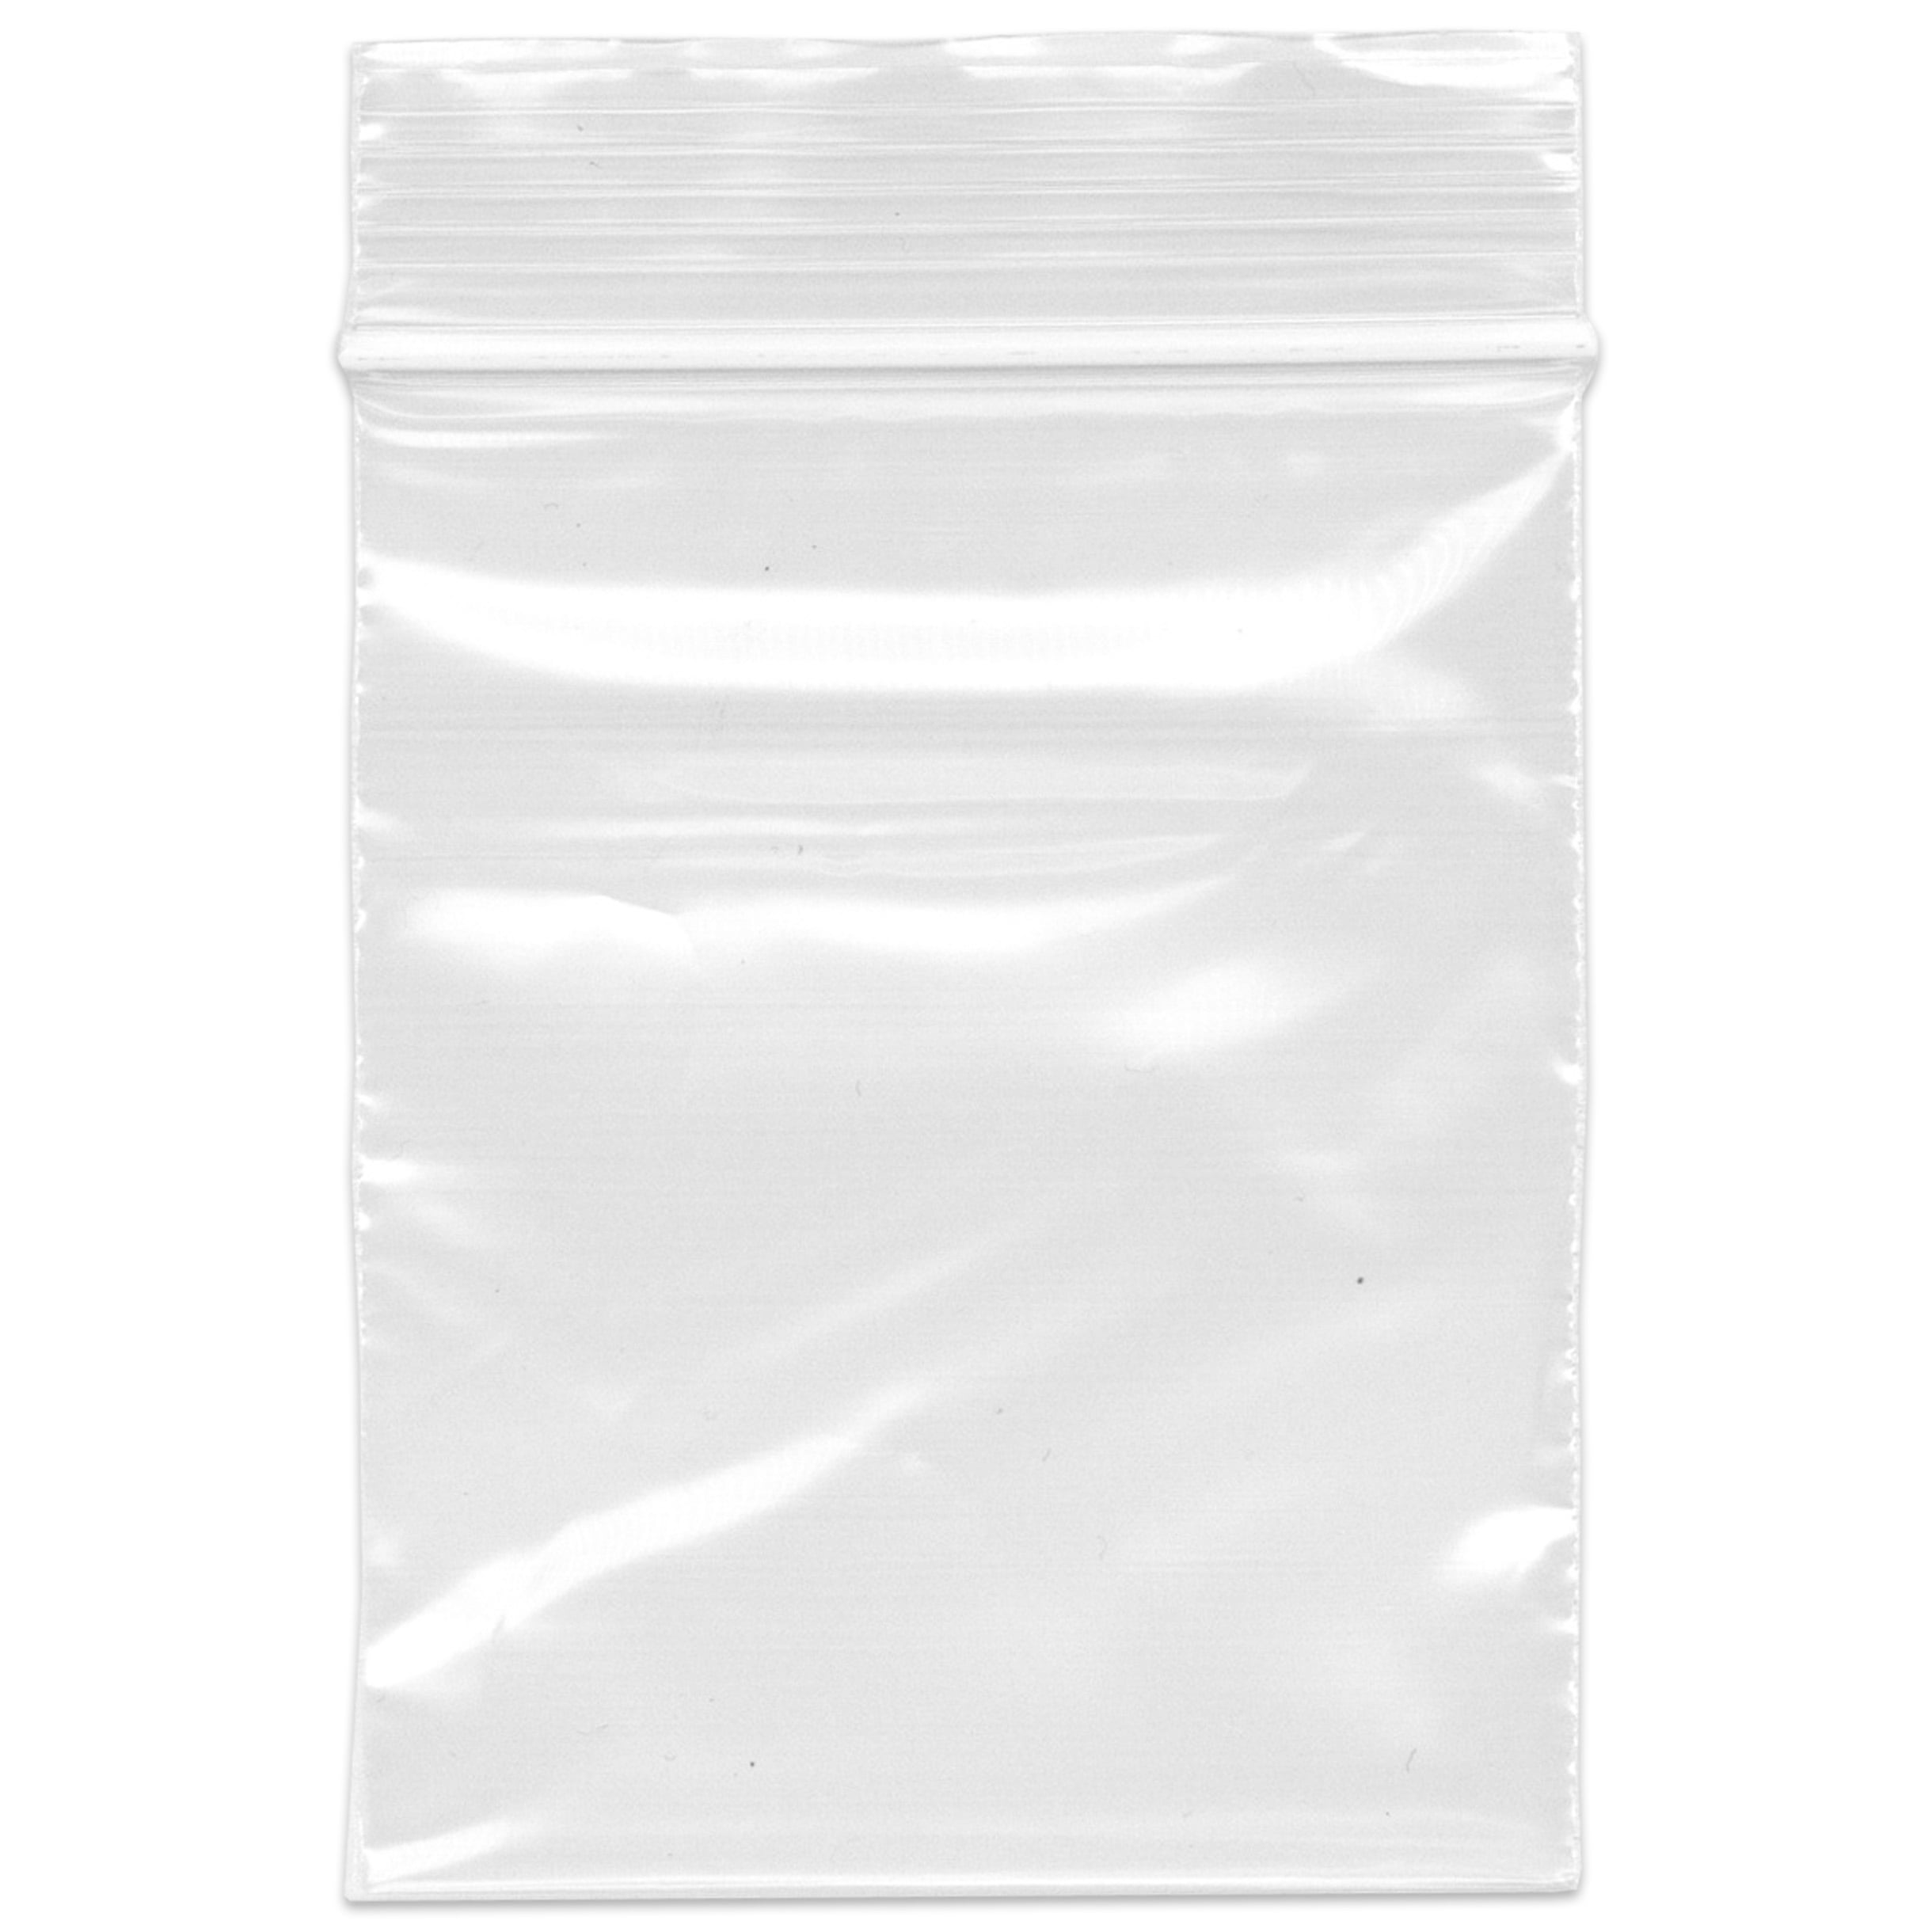 2 Mil Plymor Zipper Reclosable Plastic Bags 5 x 12 Case of 1000 